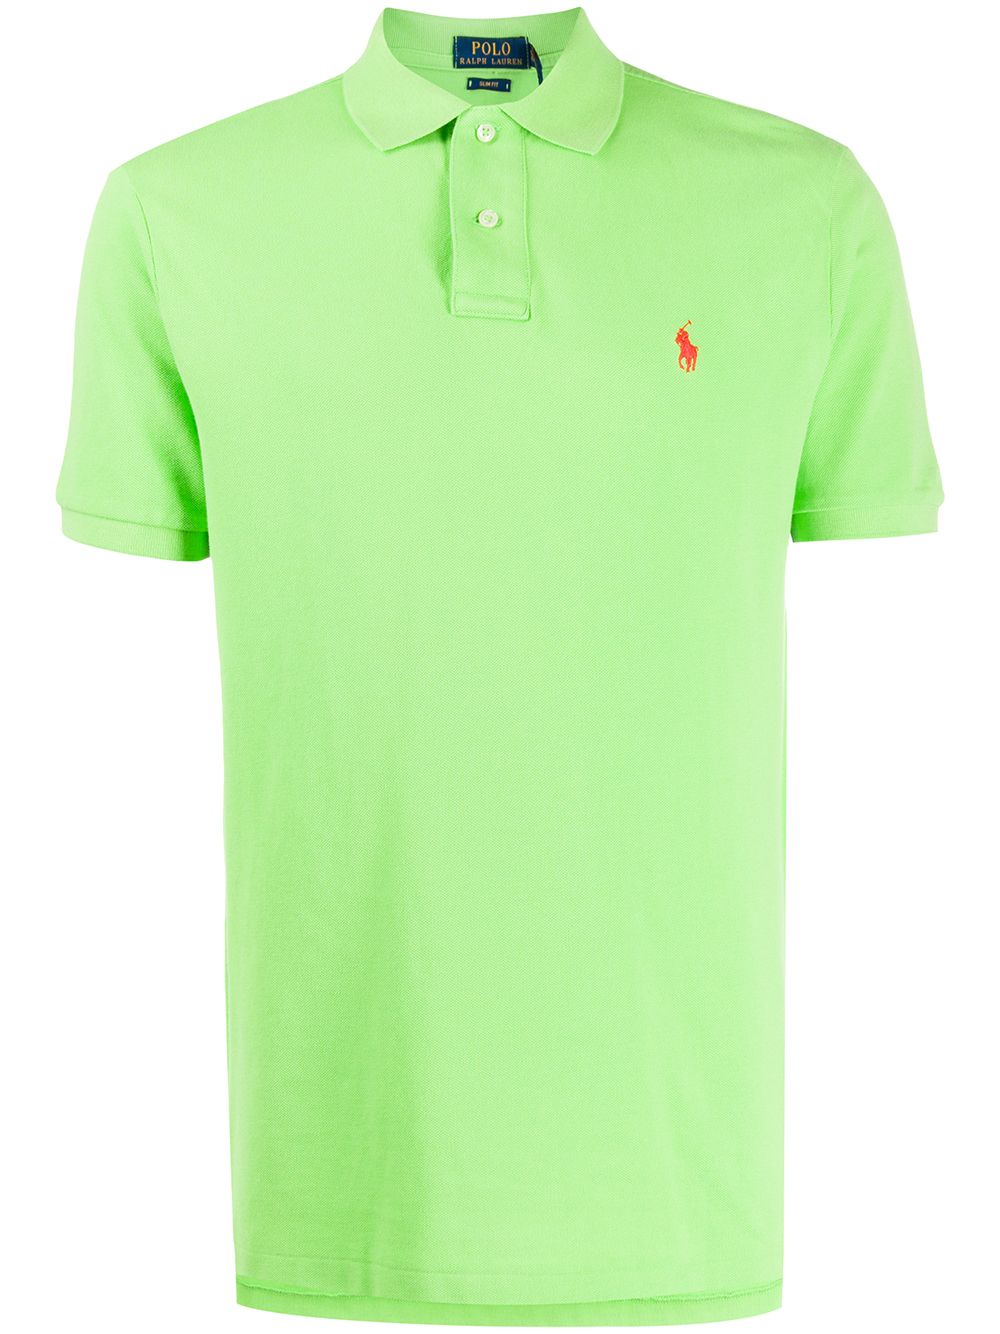 Polo Ralph Lauren embroidered logo polo shirt - Green von Polo Ralph Lauren